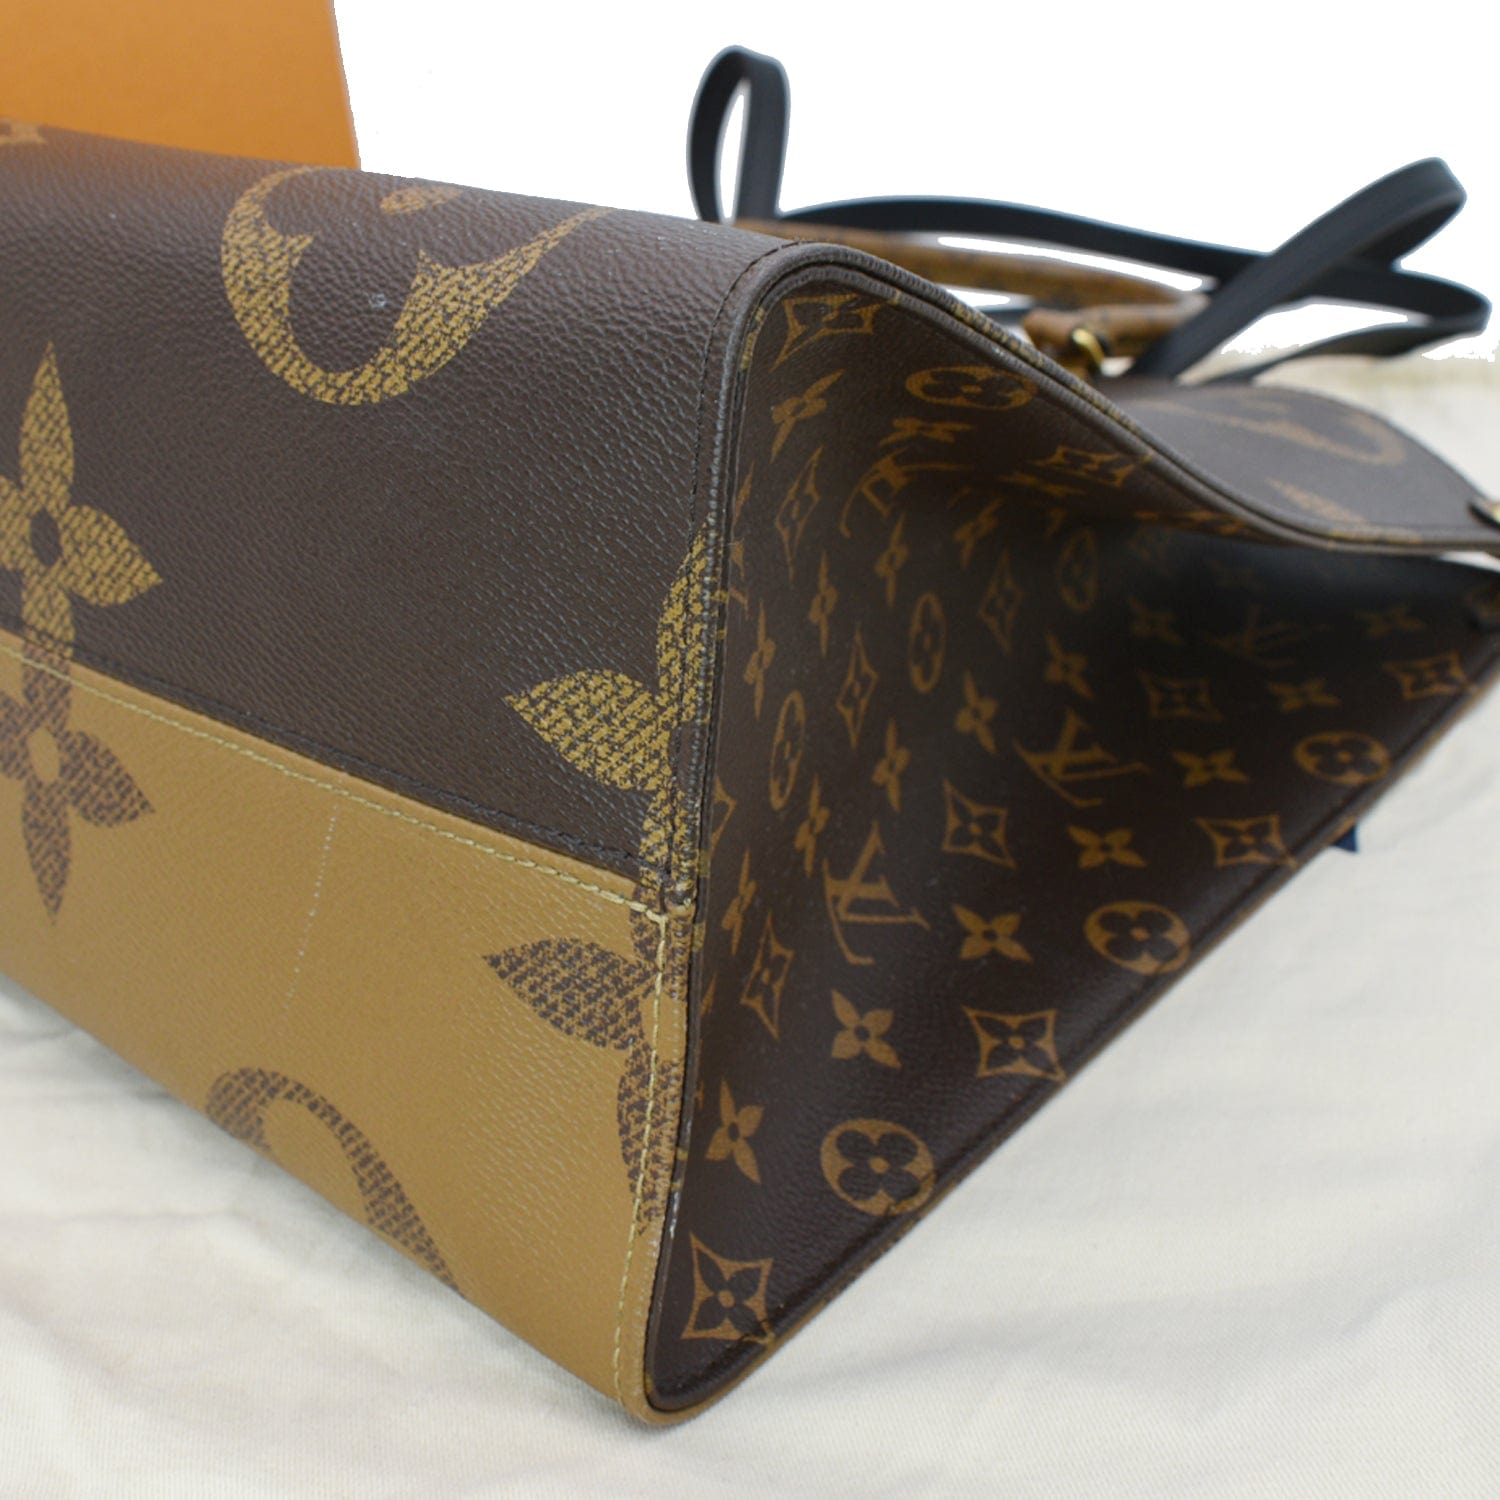 Louis Vuitton - Onthego GM Tote Bag - Monogram Canvas - Women - Luxury